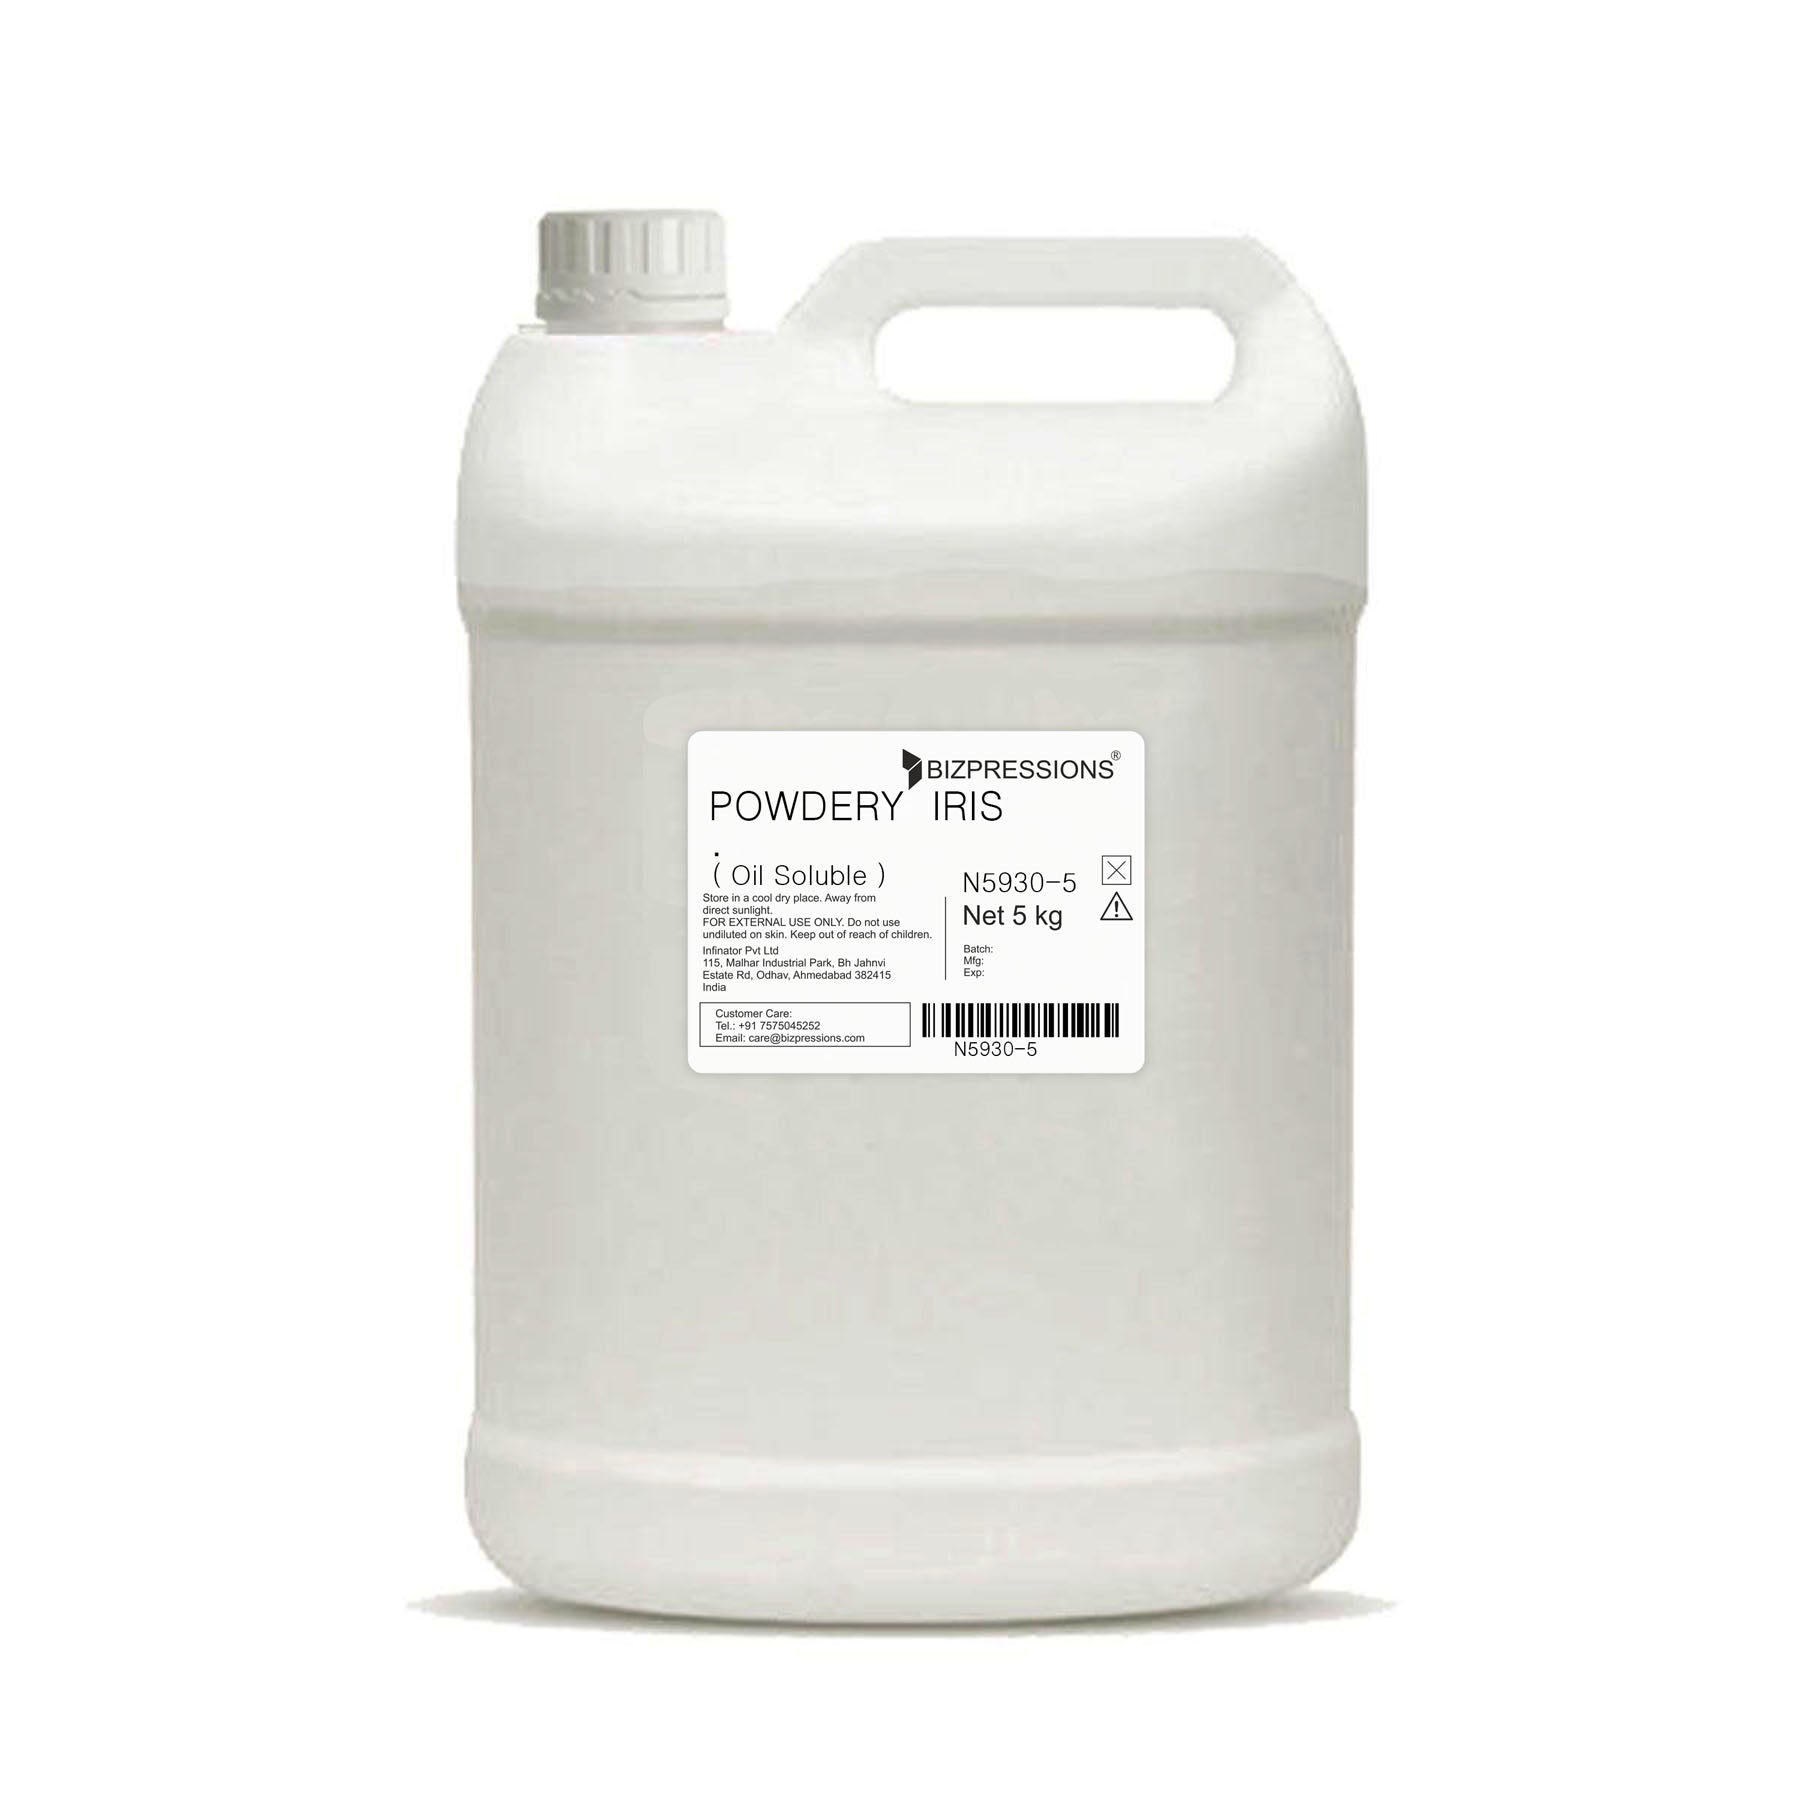 POWDERY IRIS - Fragrance ( Oil Soluble ) - 5 kg